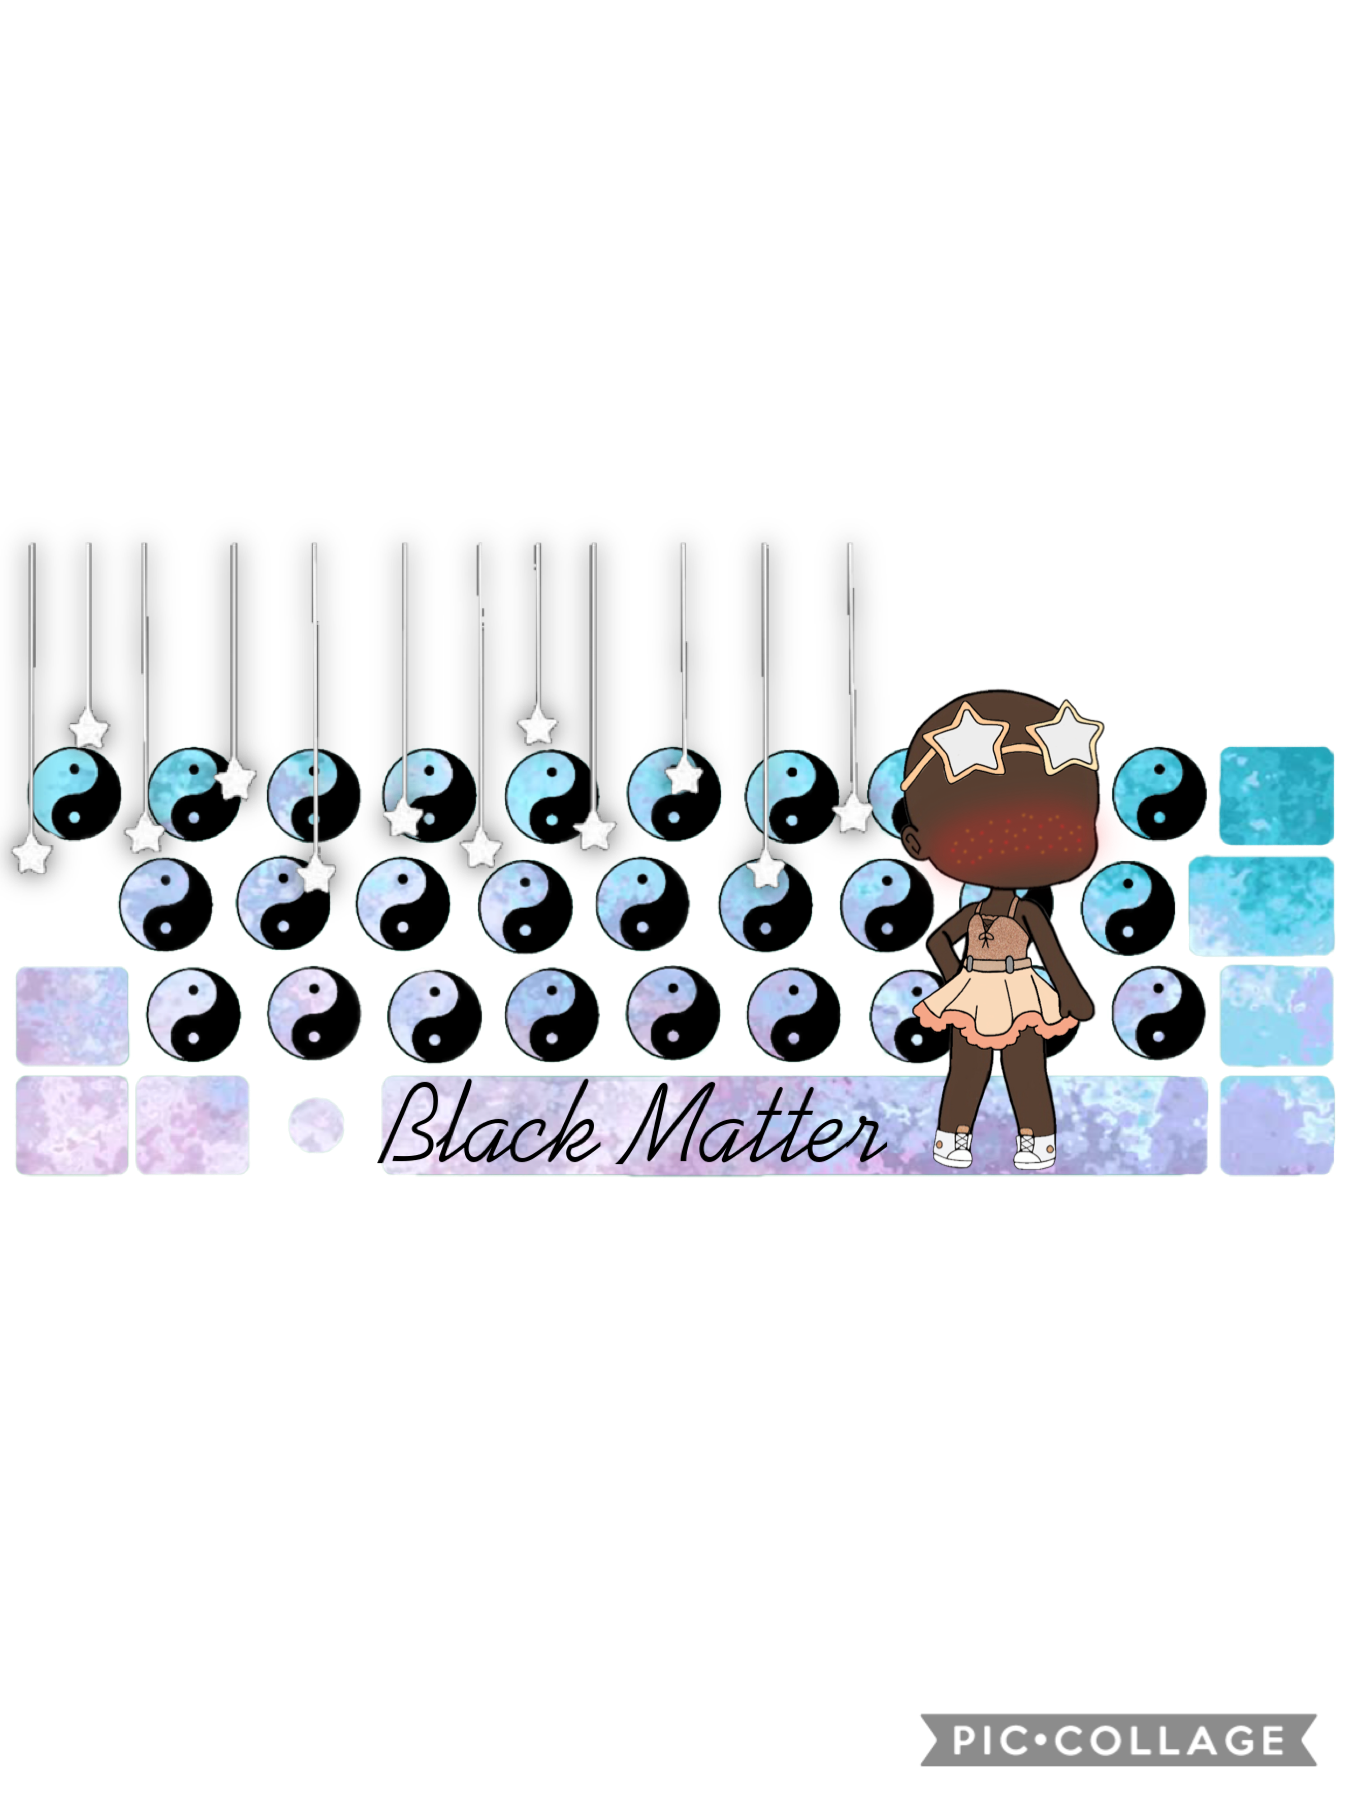 Black matter 